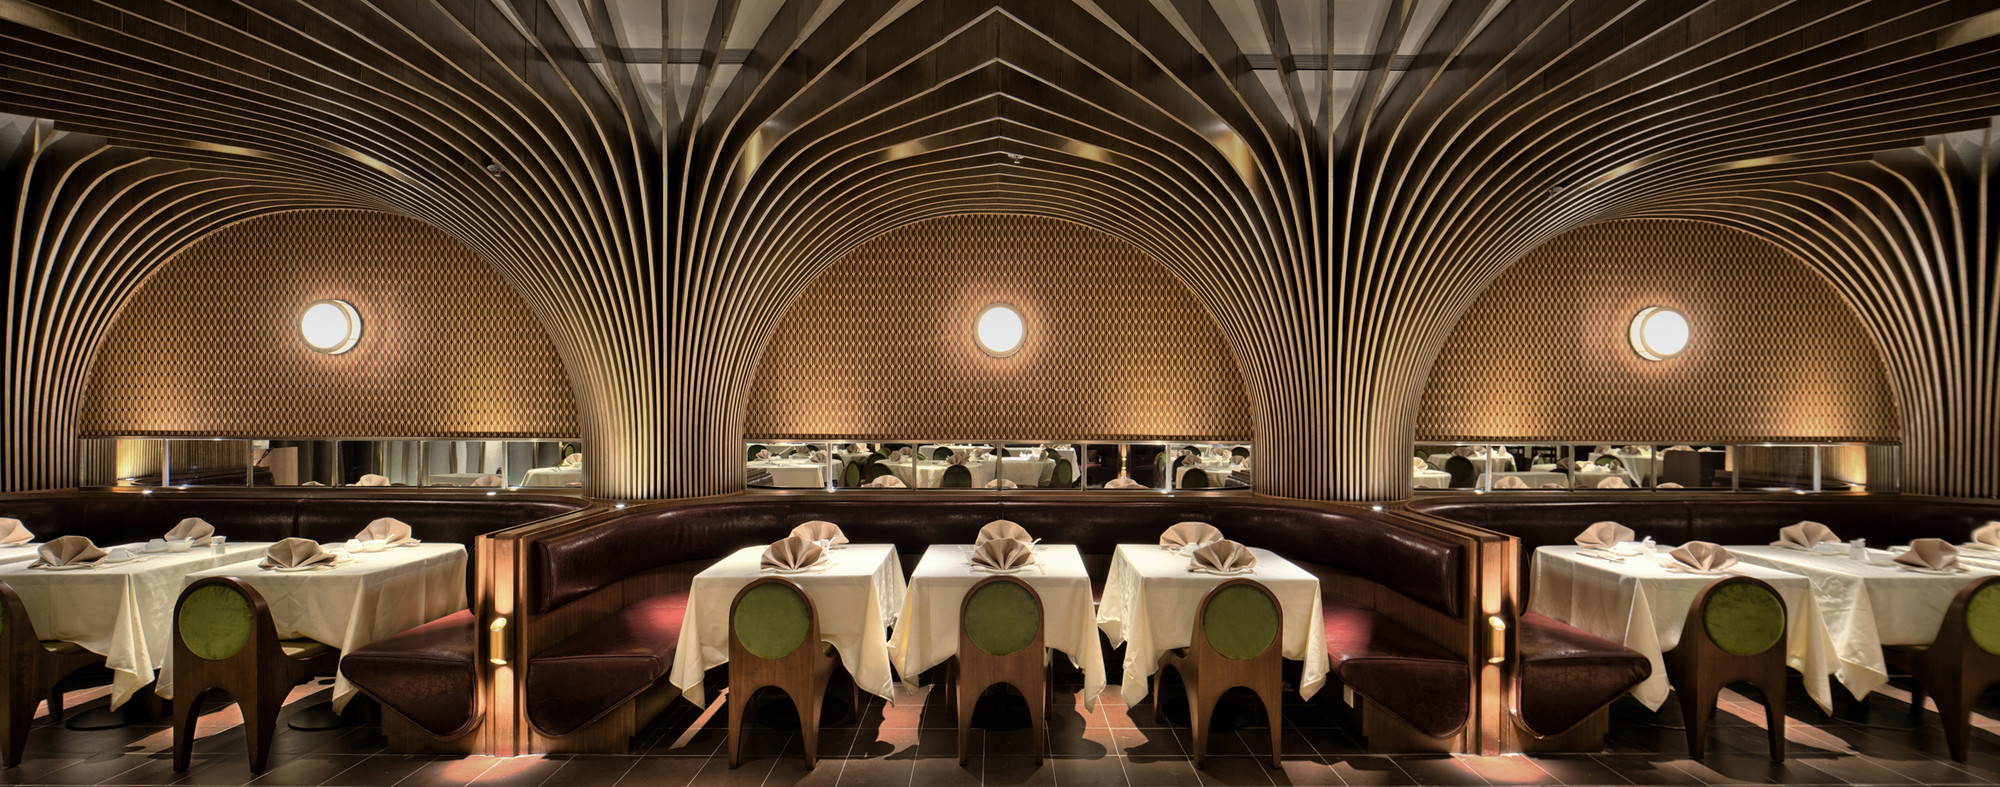 Pak Loh Times Square Restaurant  NC Design - Architecture-2